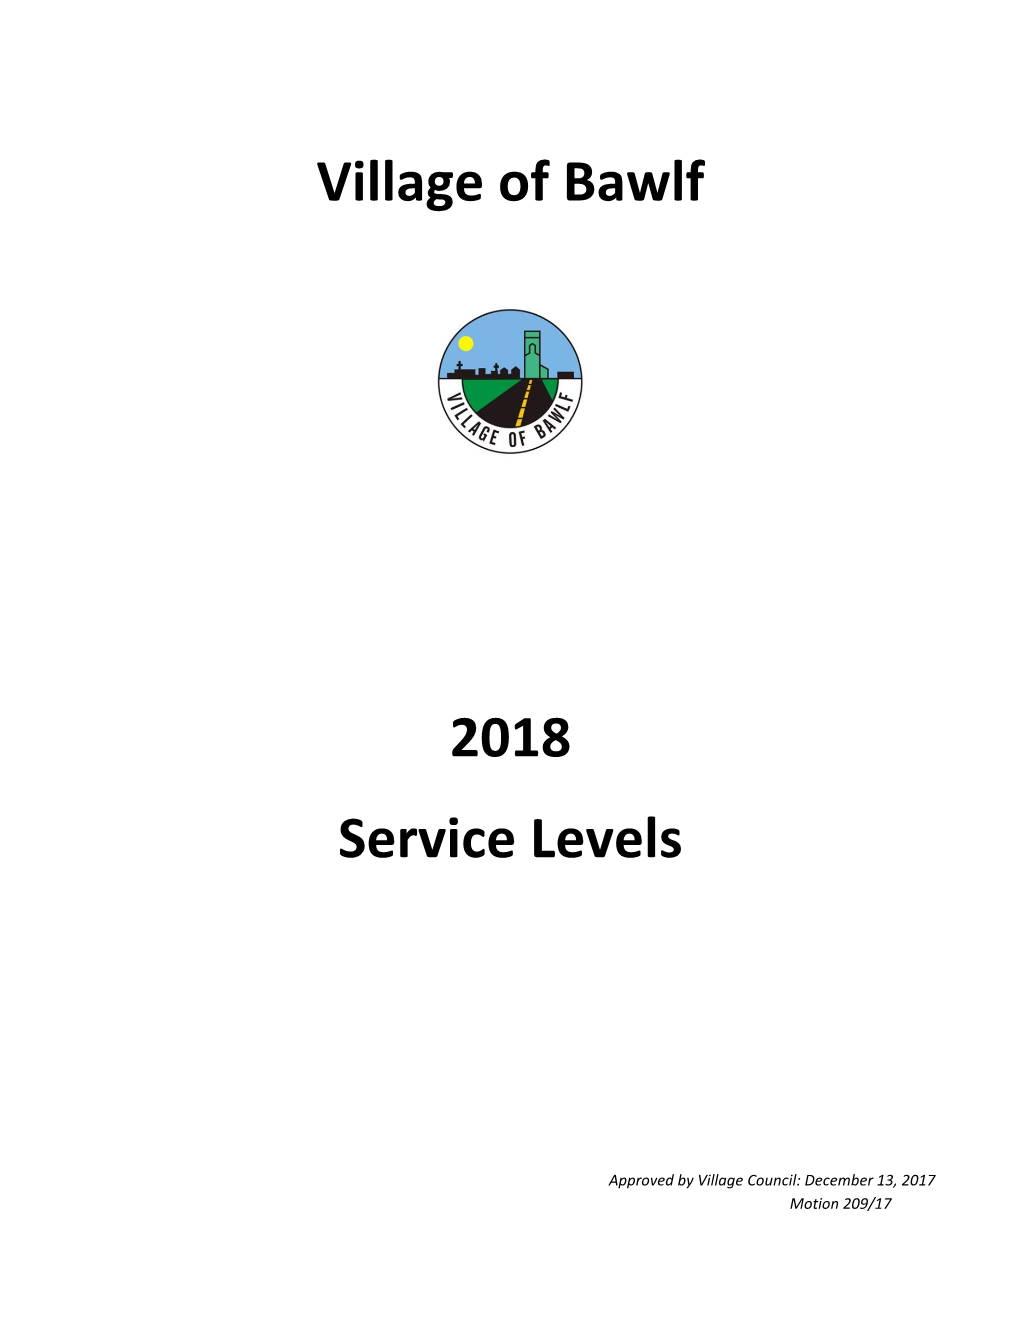 Village of Bawlf 2018 Service Levels